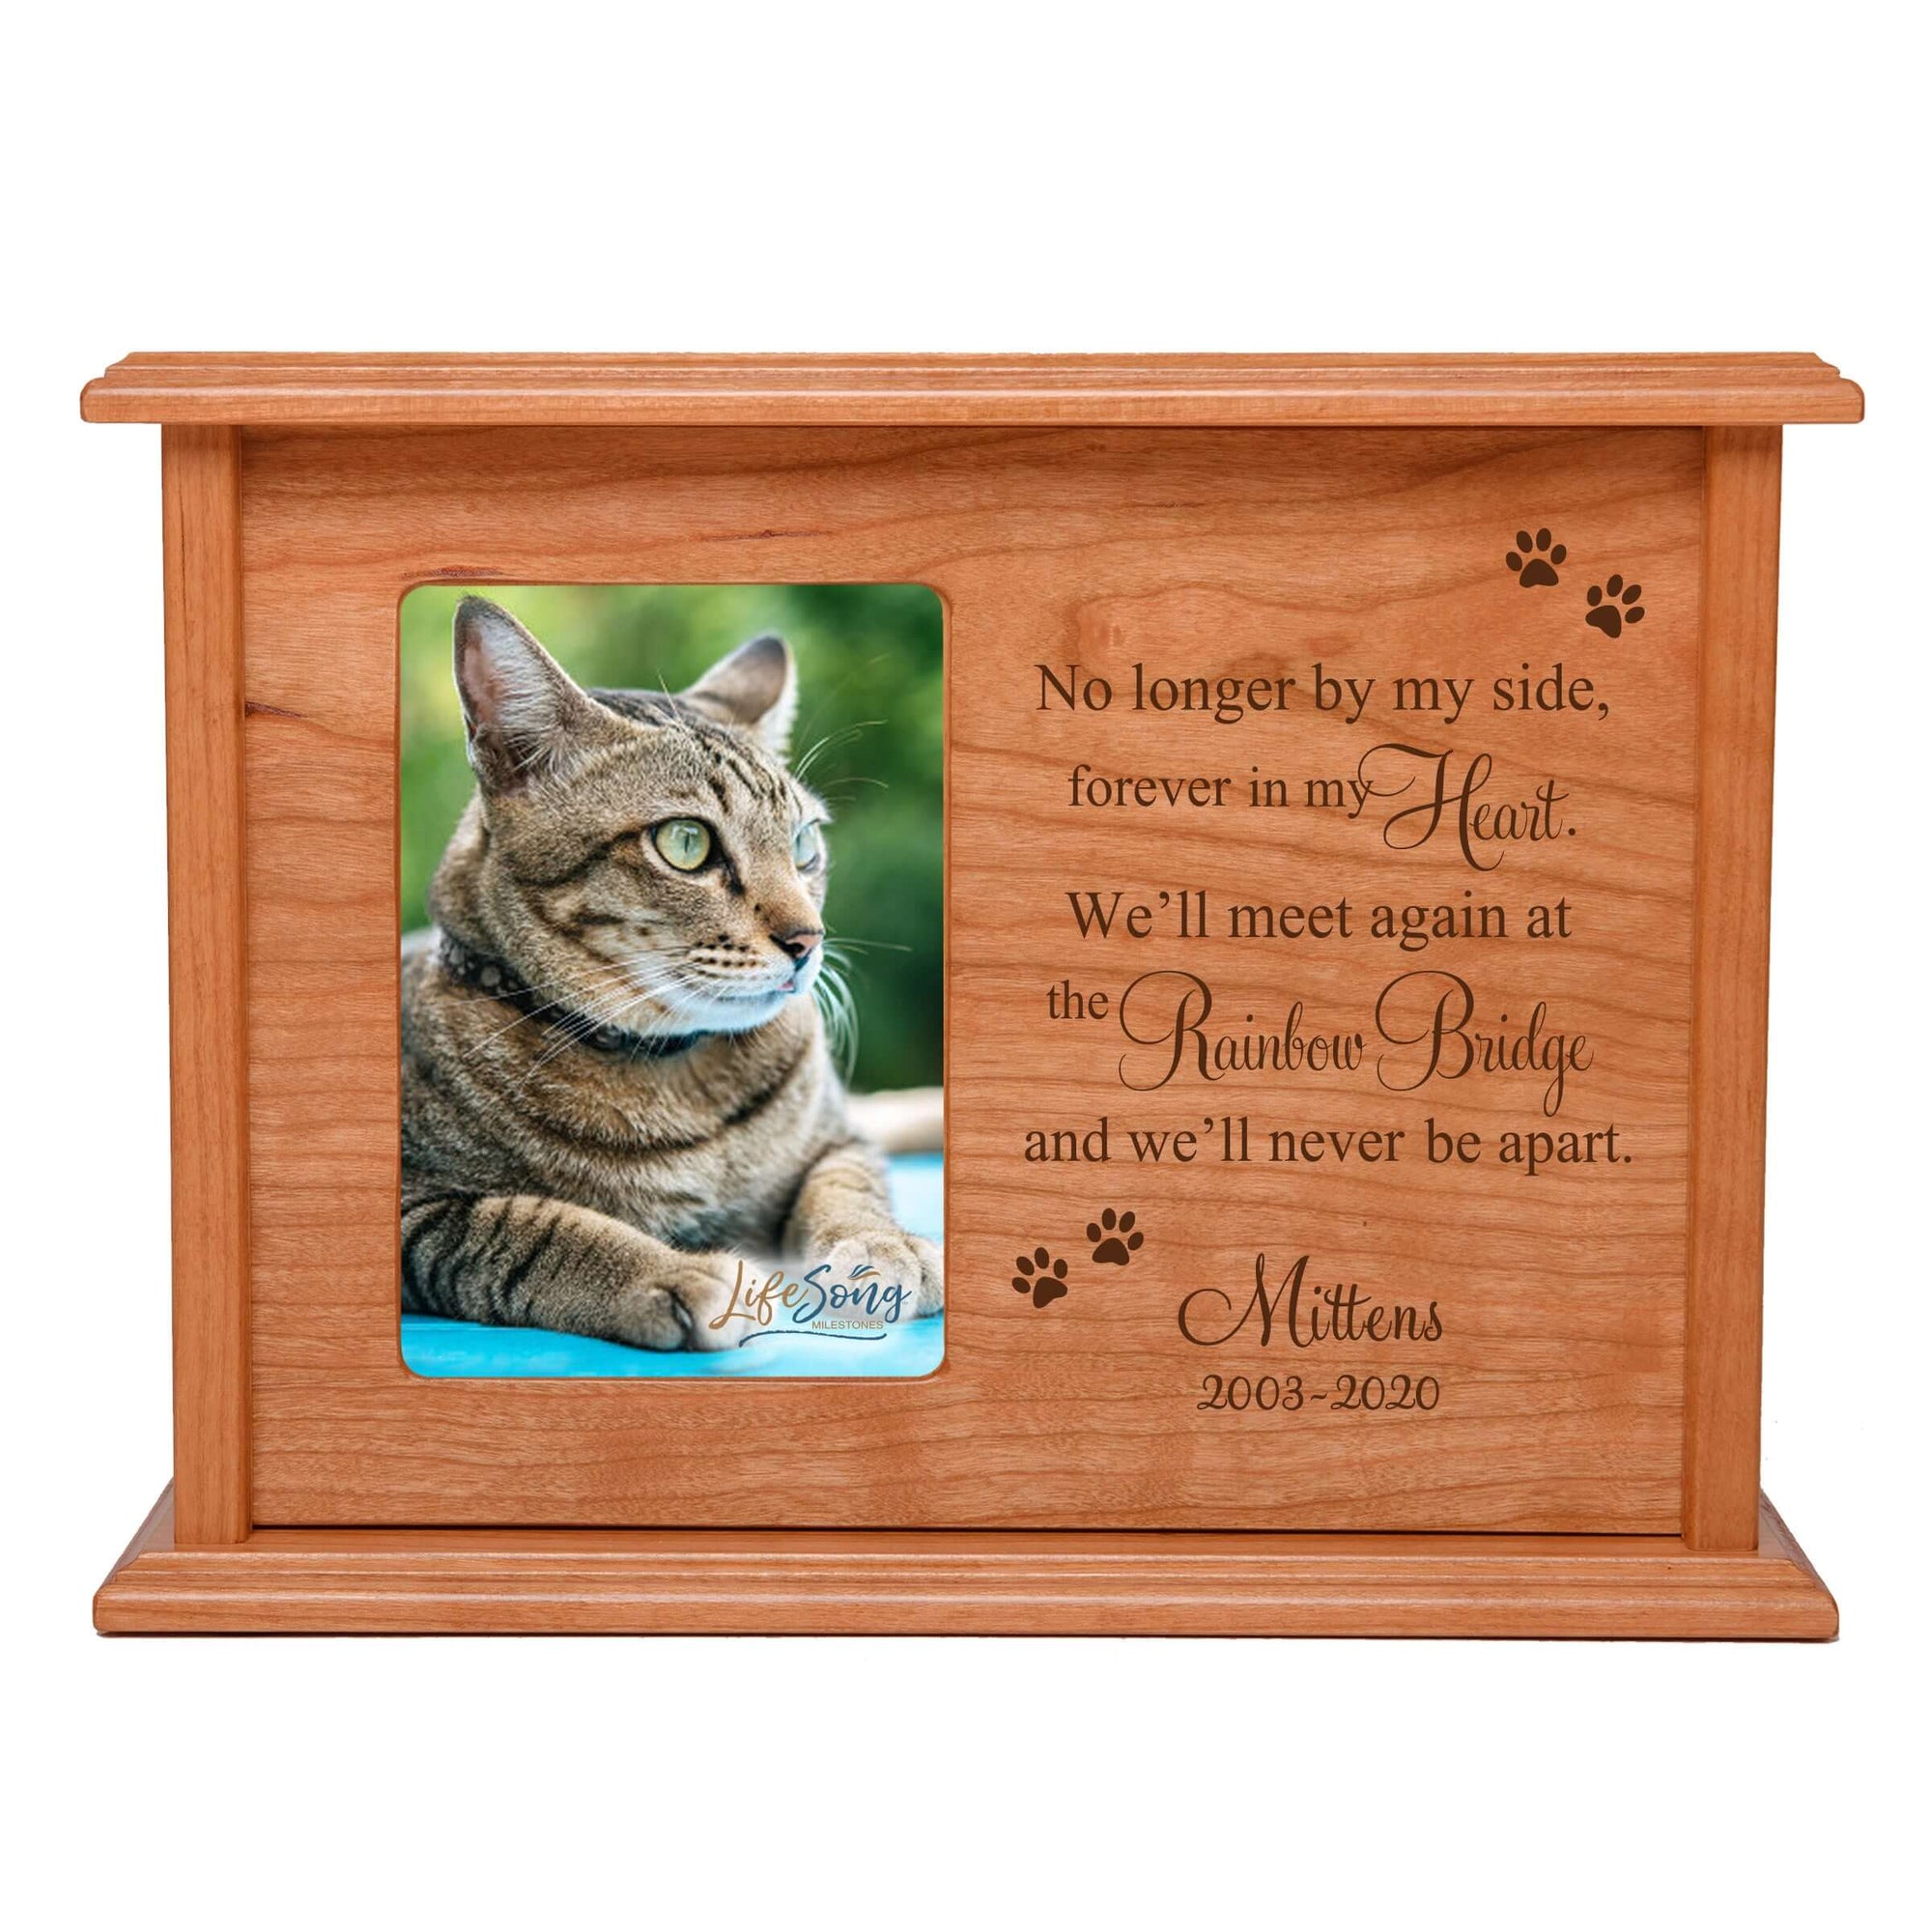 Pet Memorial Picture Cremation Urn Box for Dog or Cat - The Rainbow Bridge